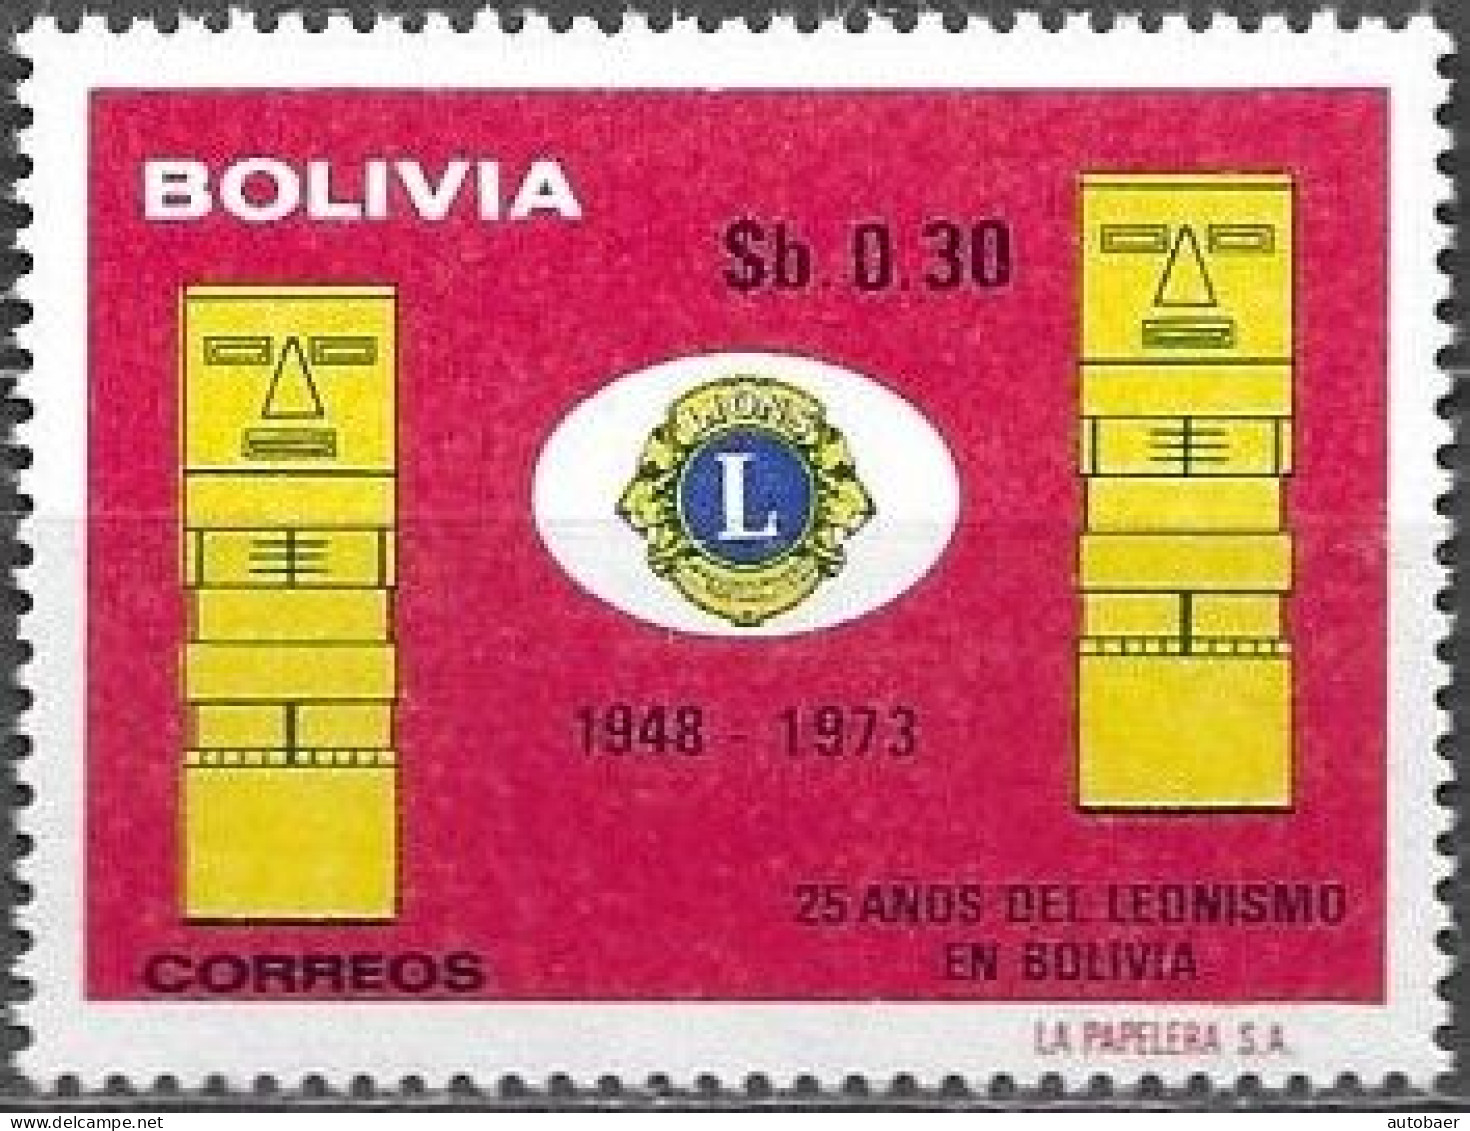 Bolivia Bolivie Bolivien 1975 25 Years Lions Club Leonismo Michel No. 872 MNH Mint Postfrisch Neuf ** - Bolivie